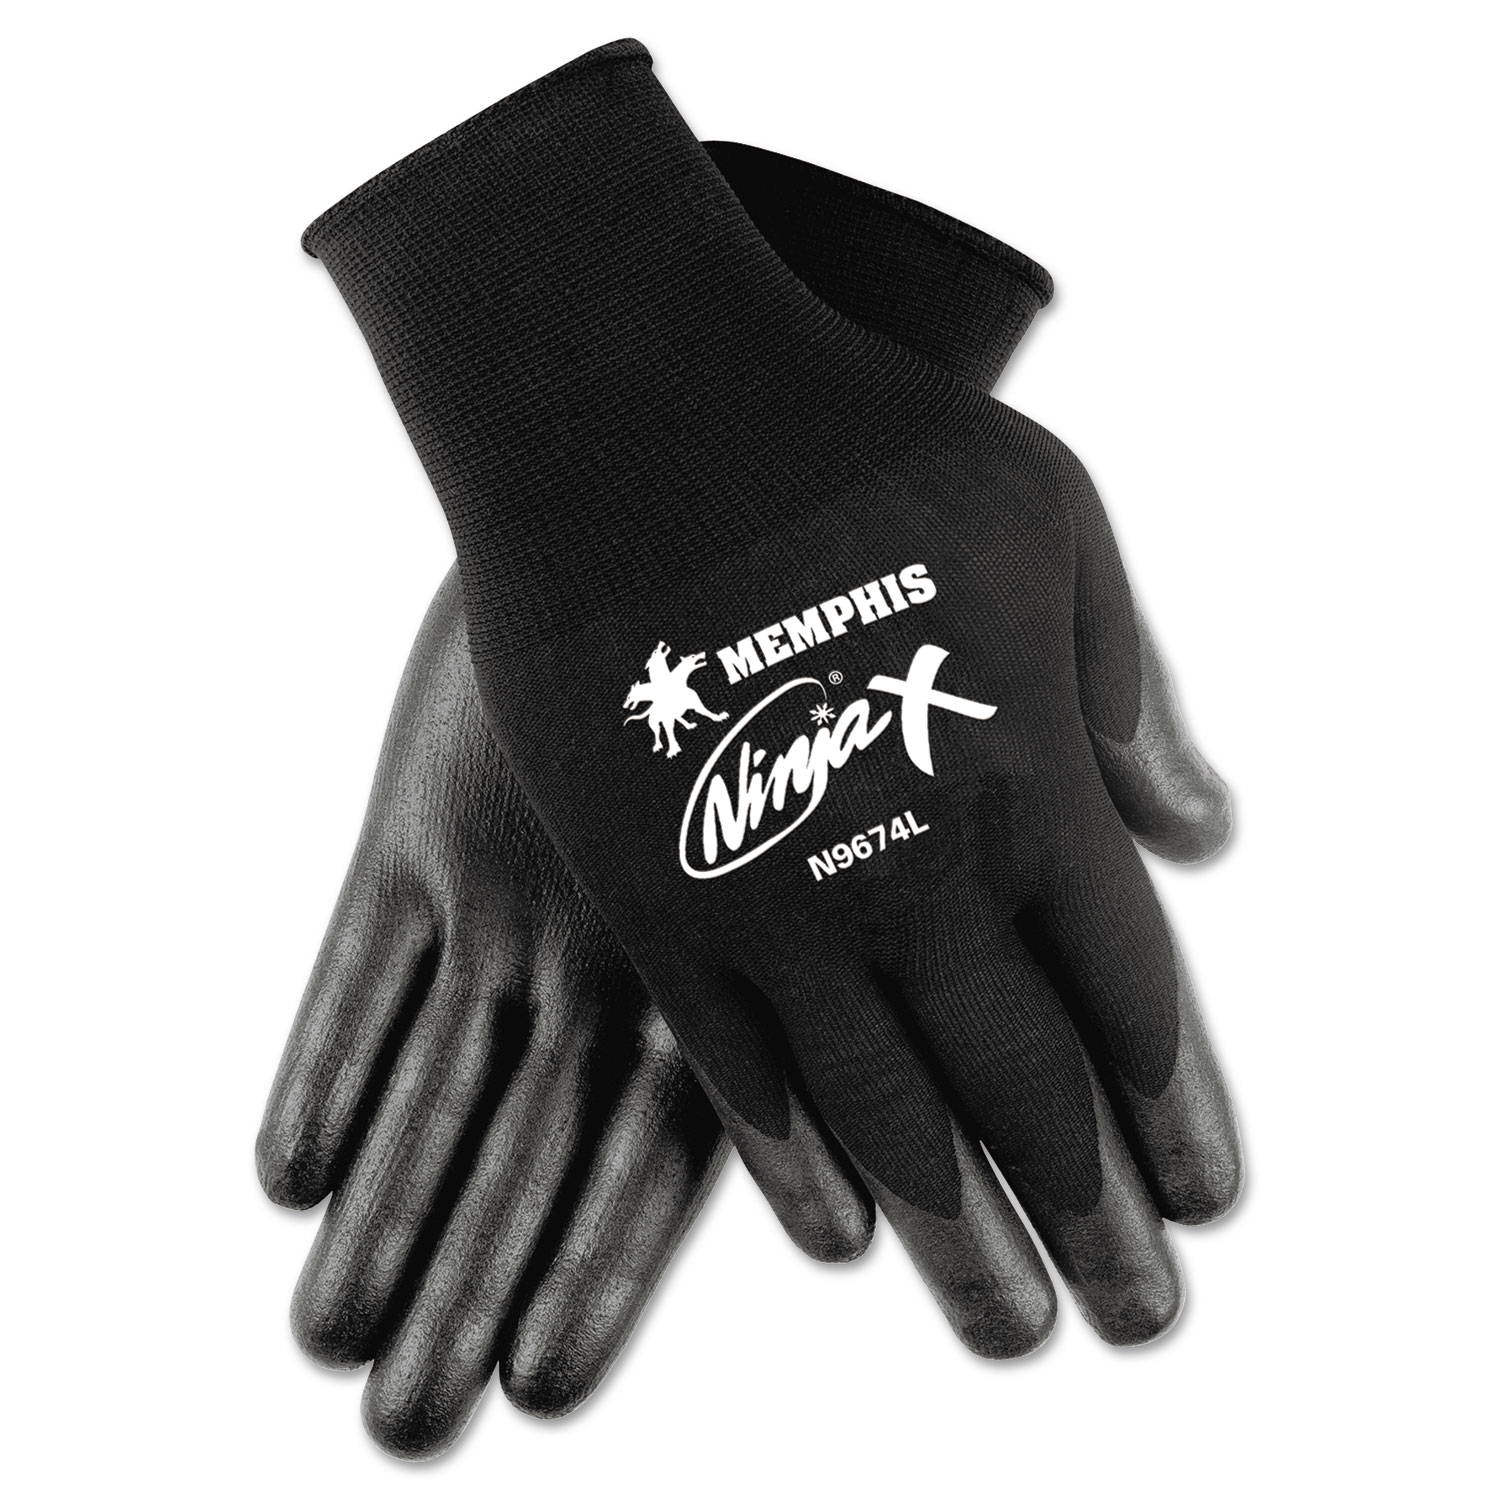  MCR Safety N9674M Ninja x Bi-Polymer Coated Gloves, Medium, Black, Pair (CRWN9674M) 